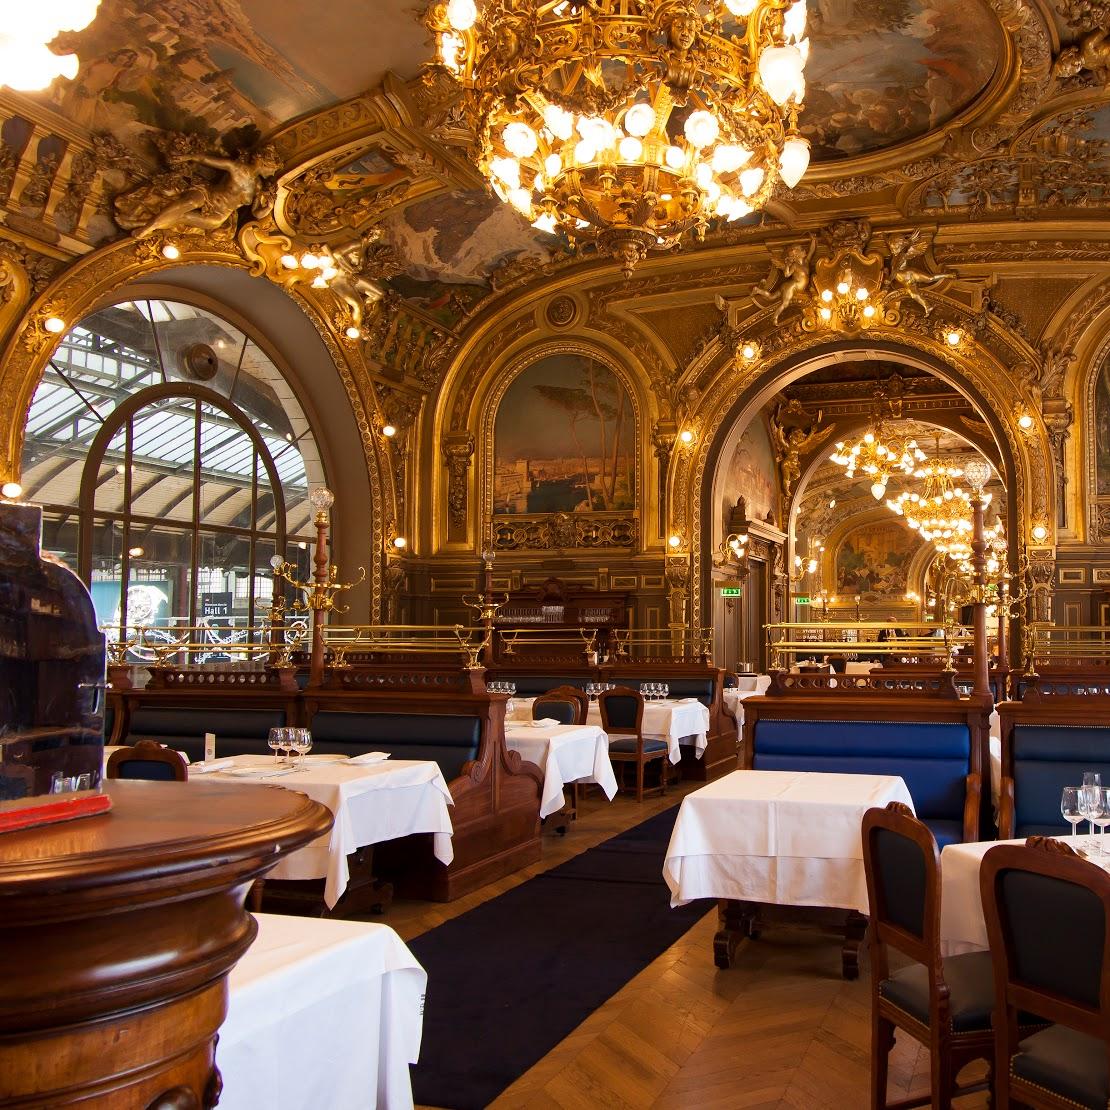 Restaurant "Le Train Bleu" in Paris